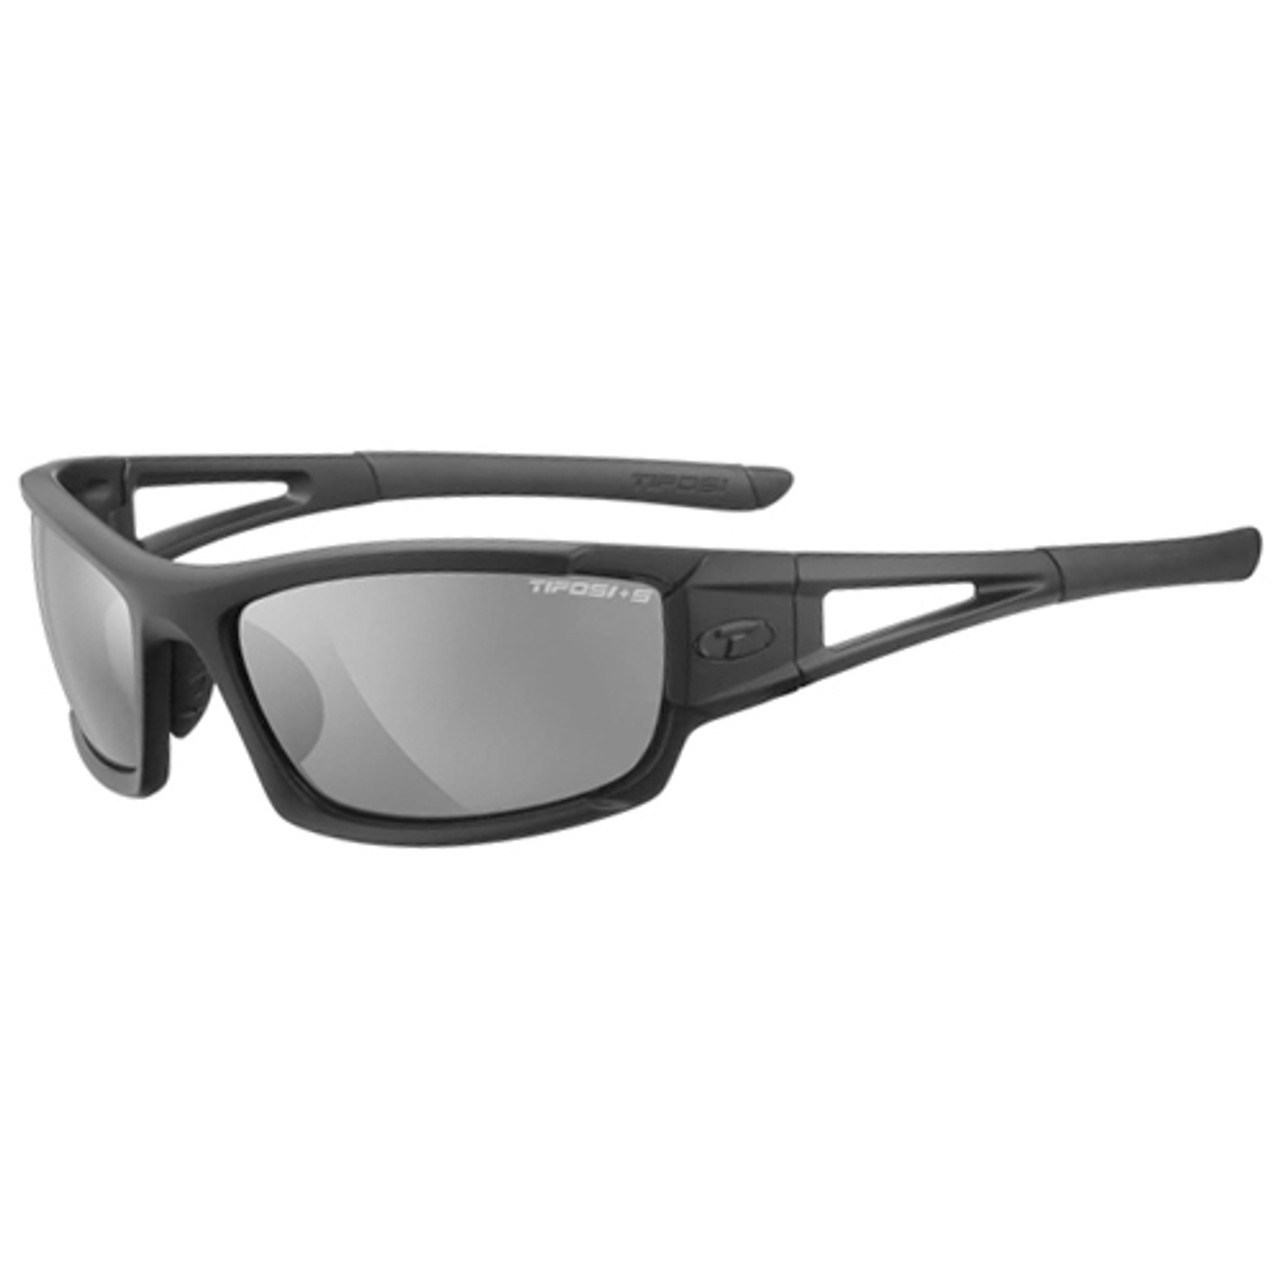 Lens for the Dolomite 2.0 Tifosi Sunglasses